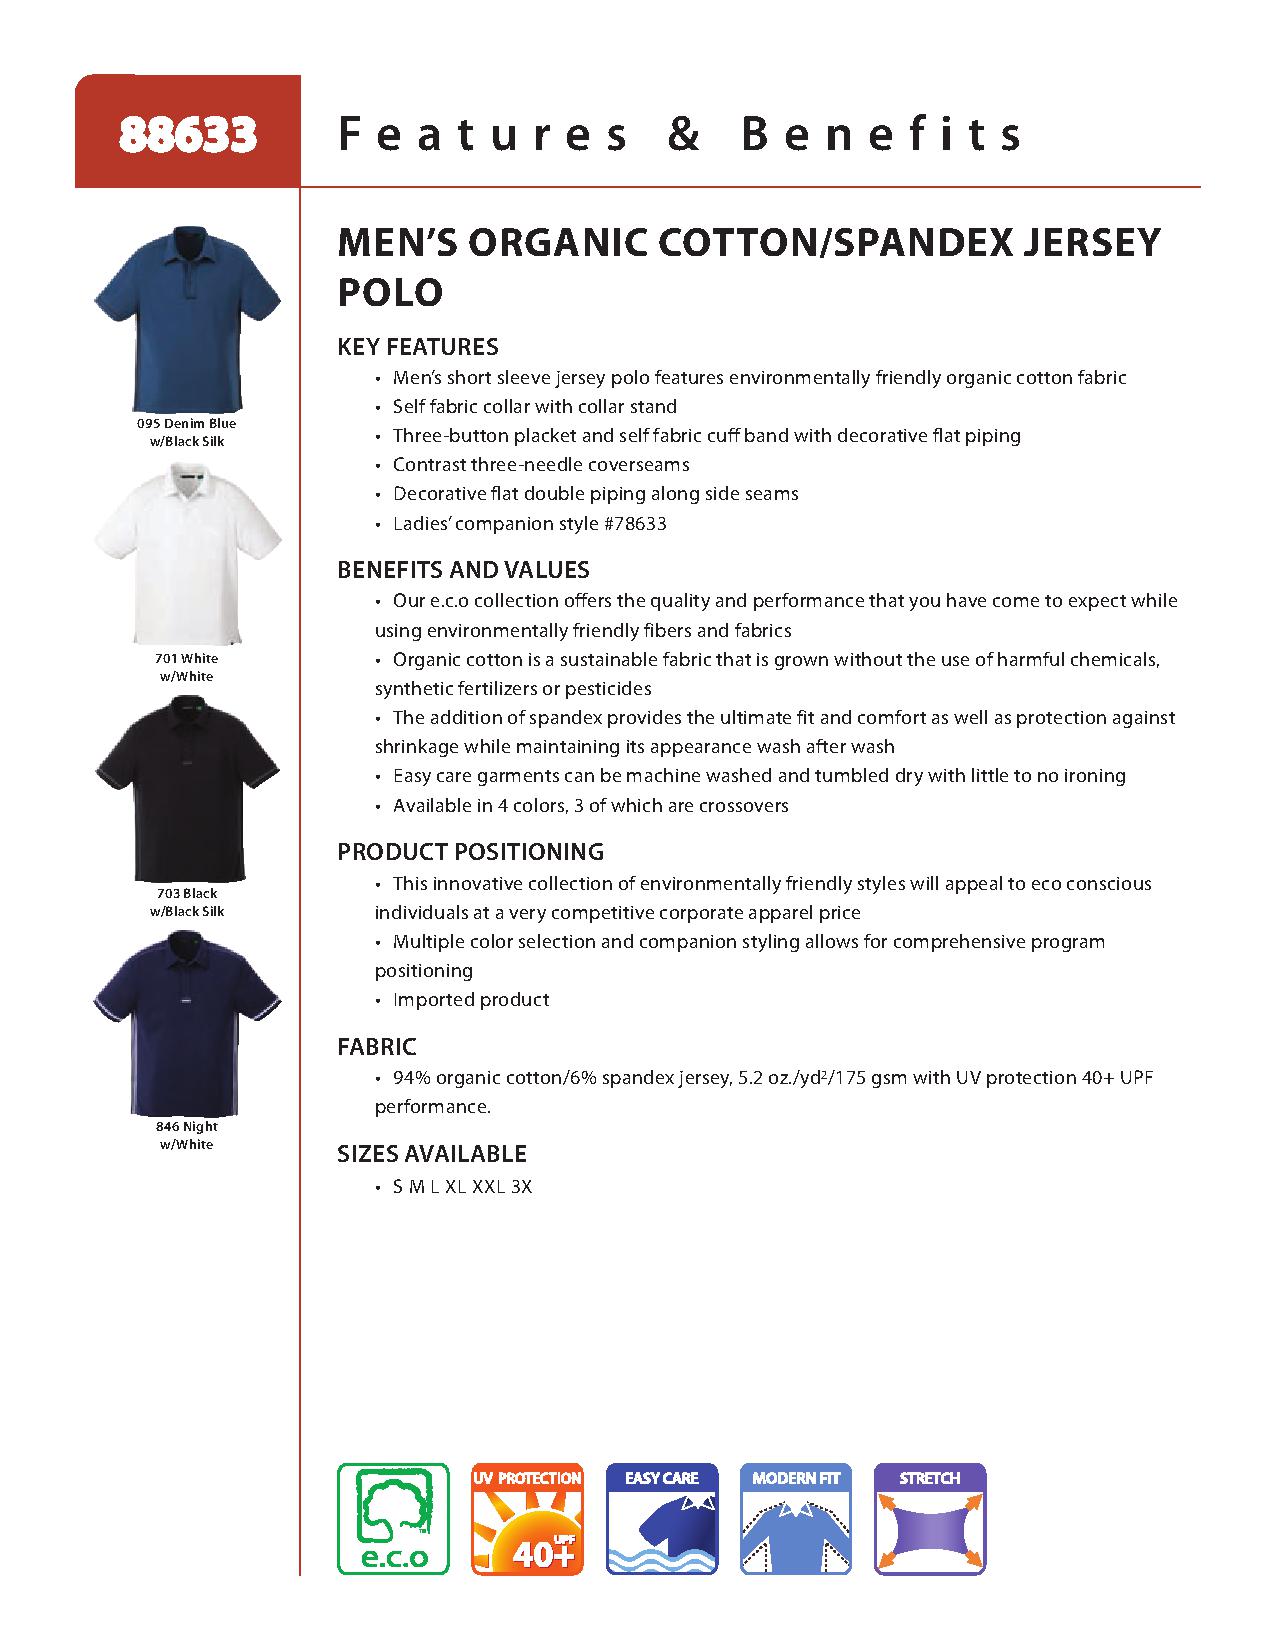 Ash City e.c.o Knits 88633 - Men's Organice Cotton/Spanddex Jersey Polo